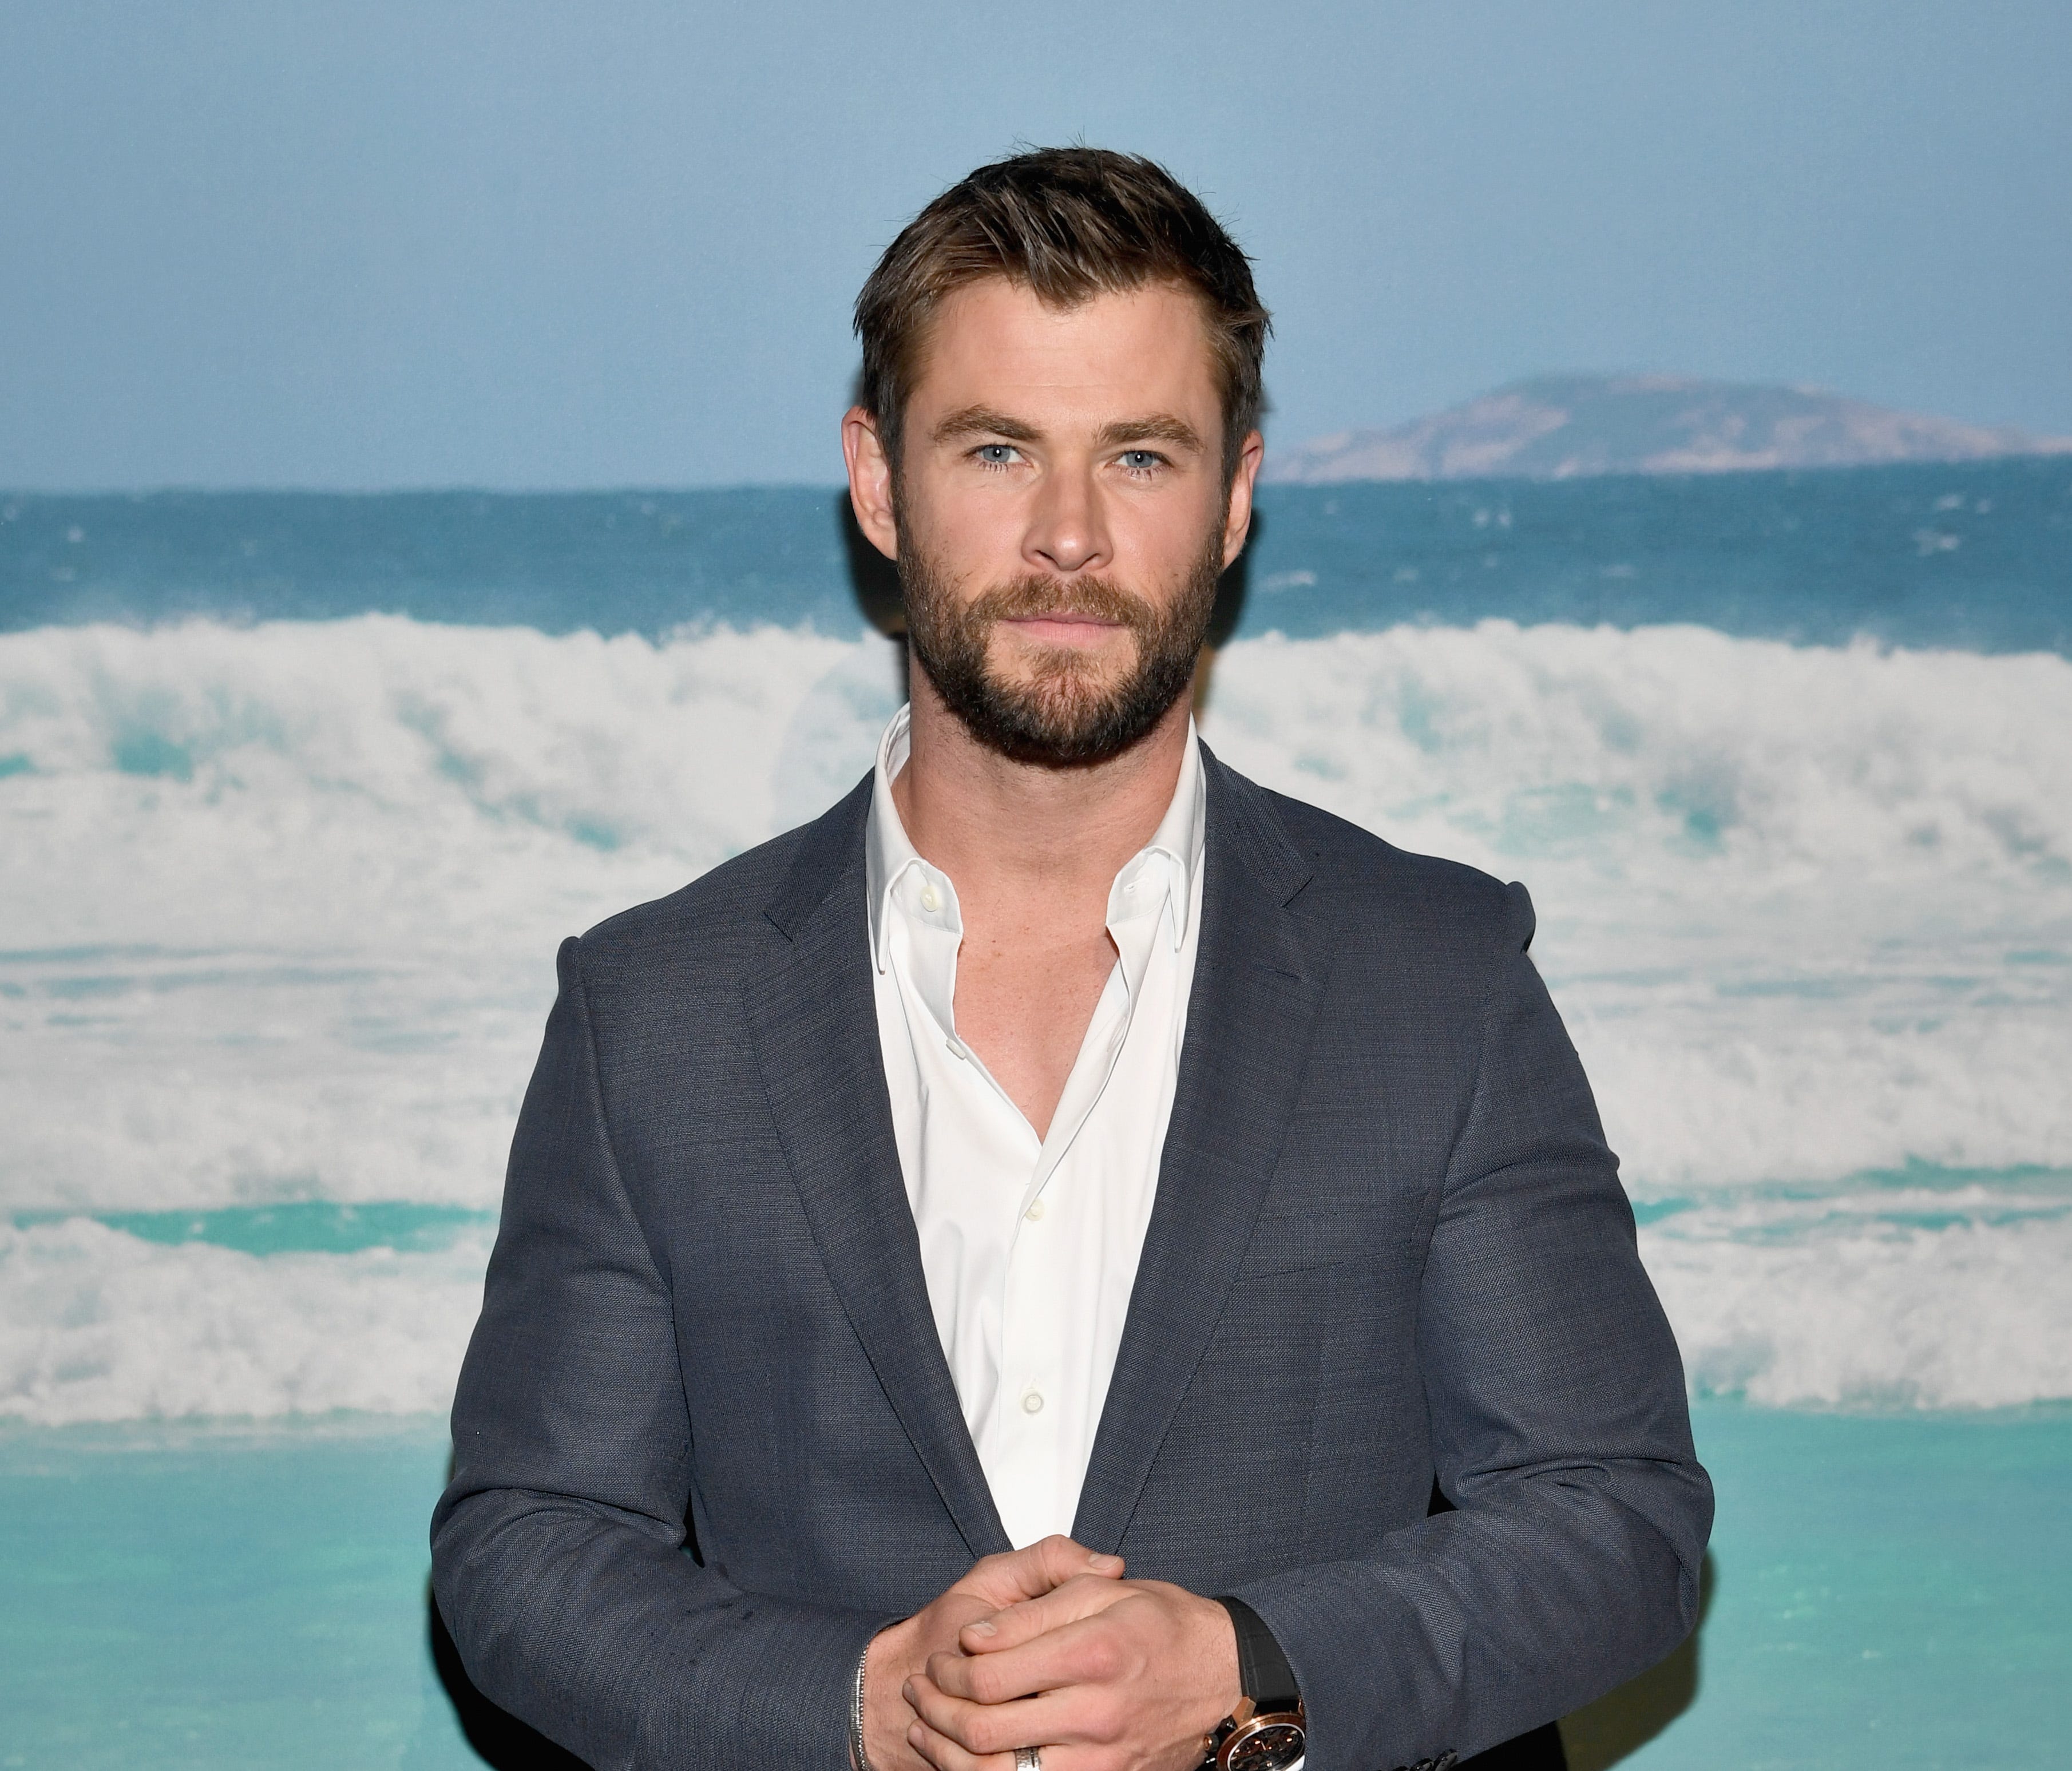 Actor Chris Hemsworth is the global ambassador for Tourism Australia.